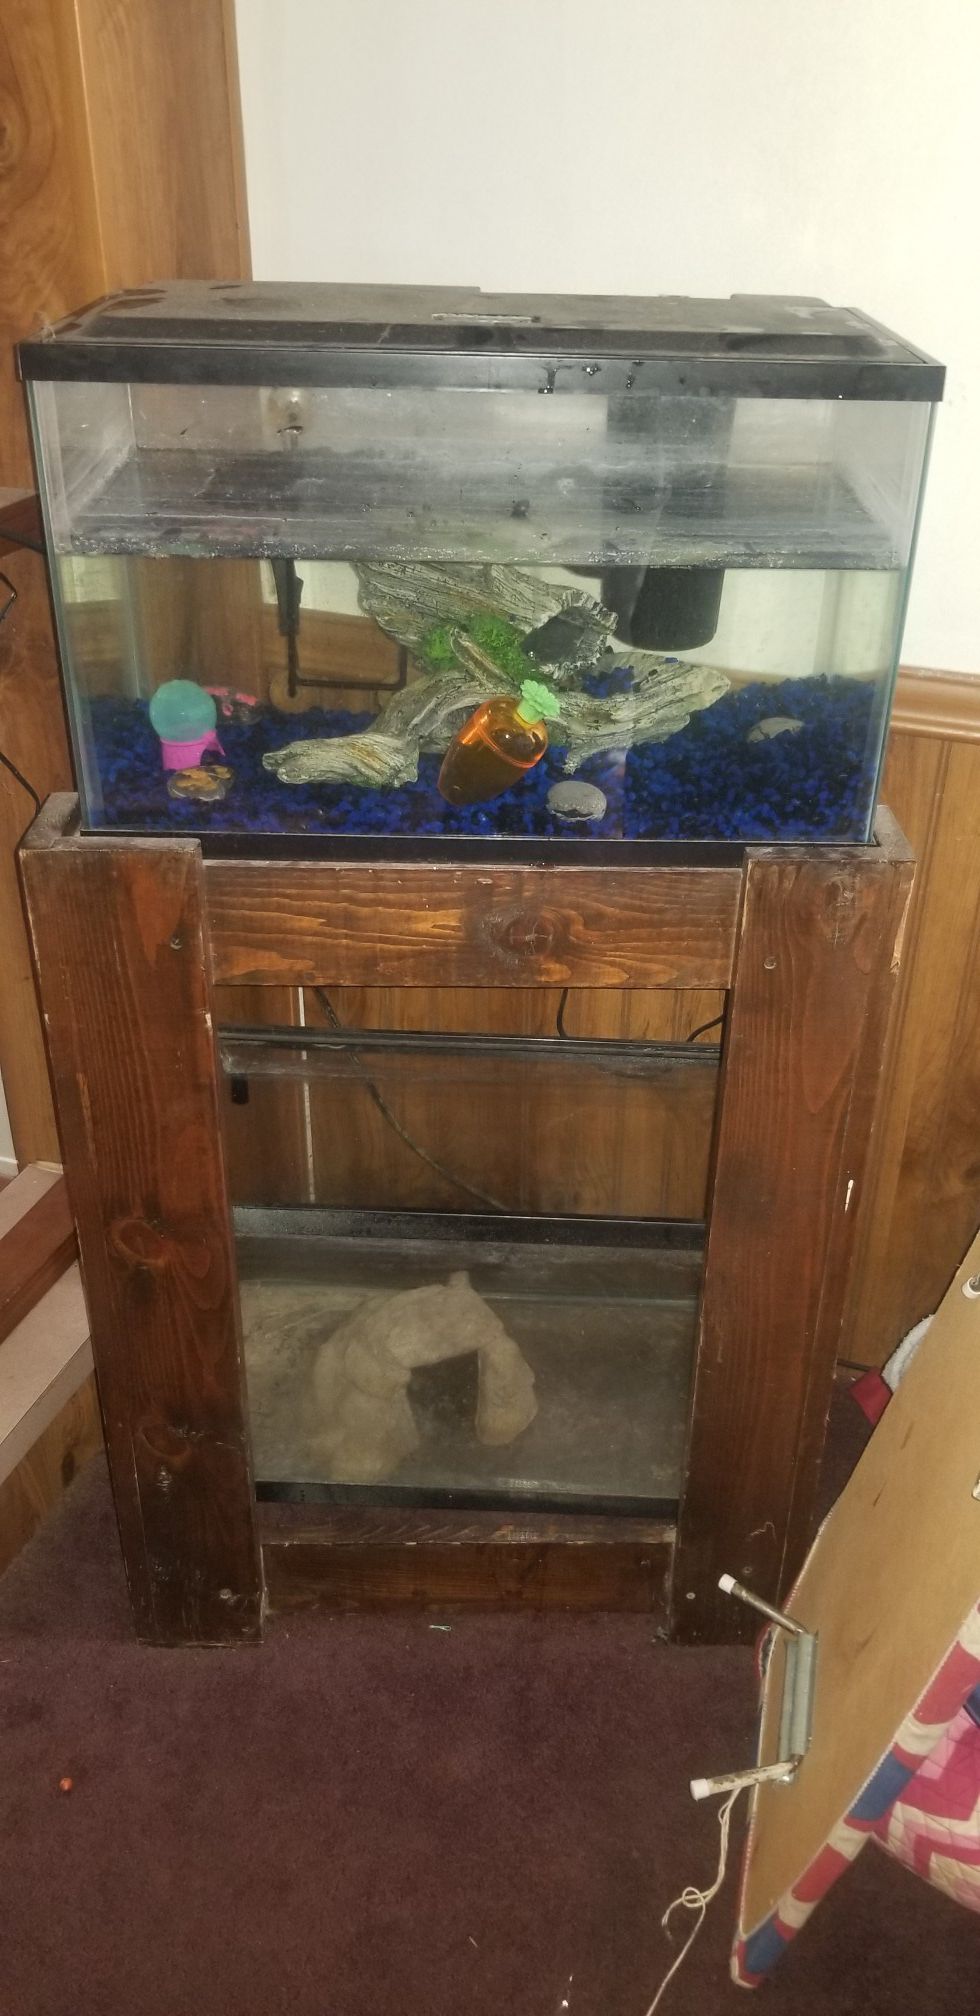 2 fish tanks